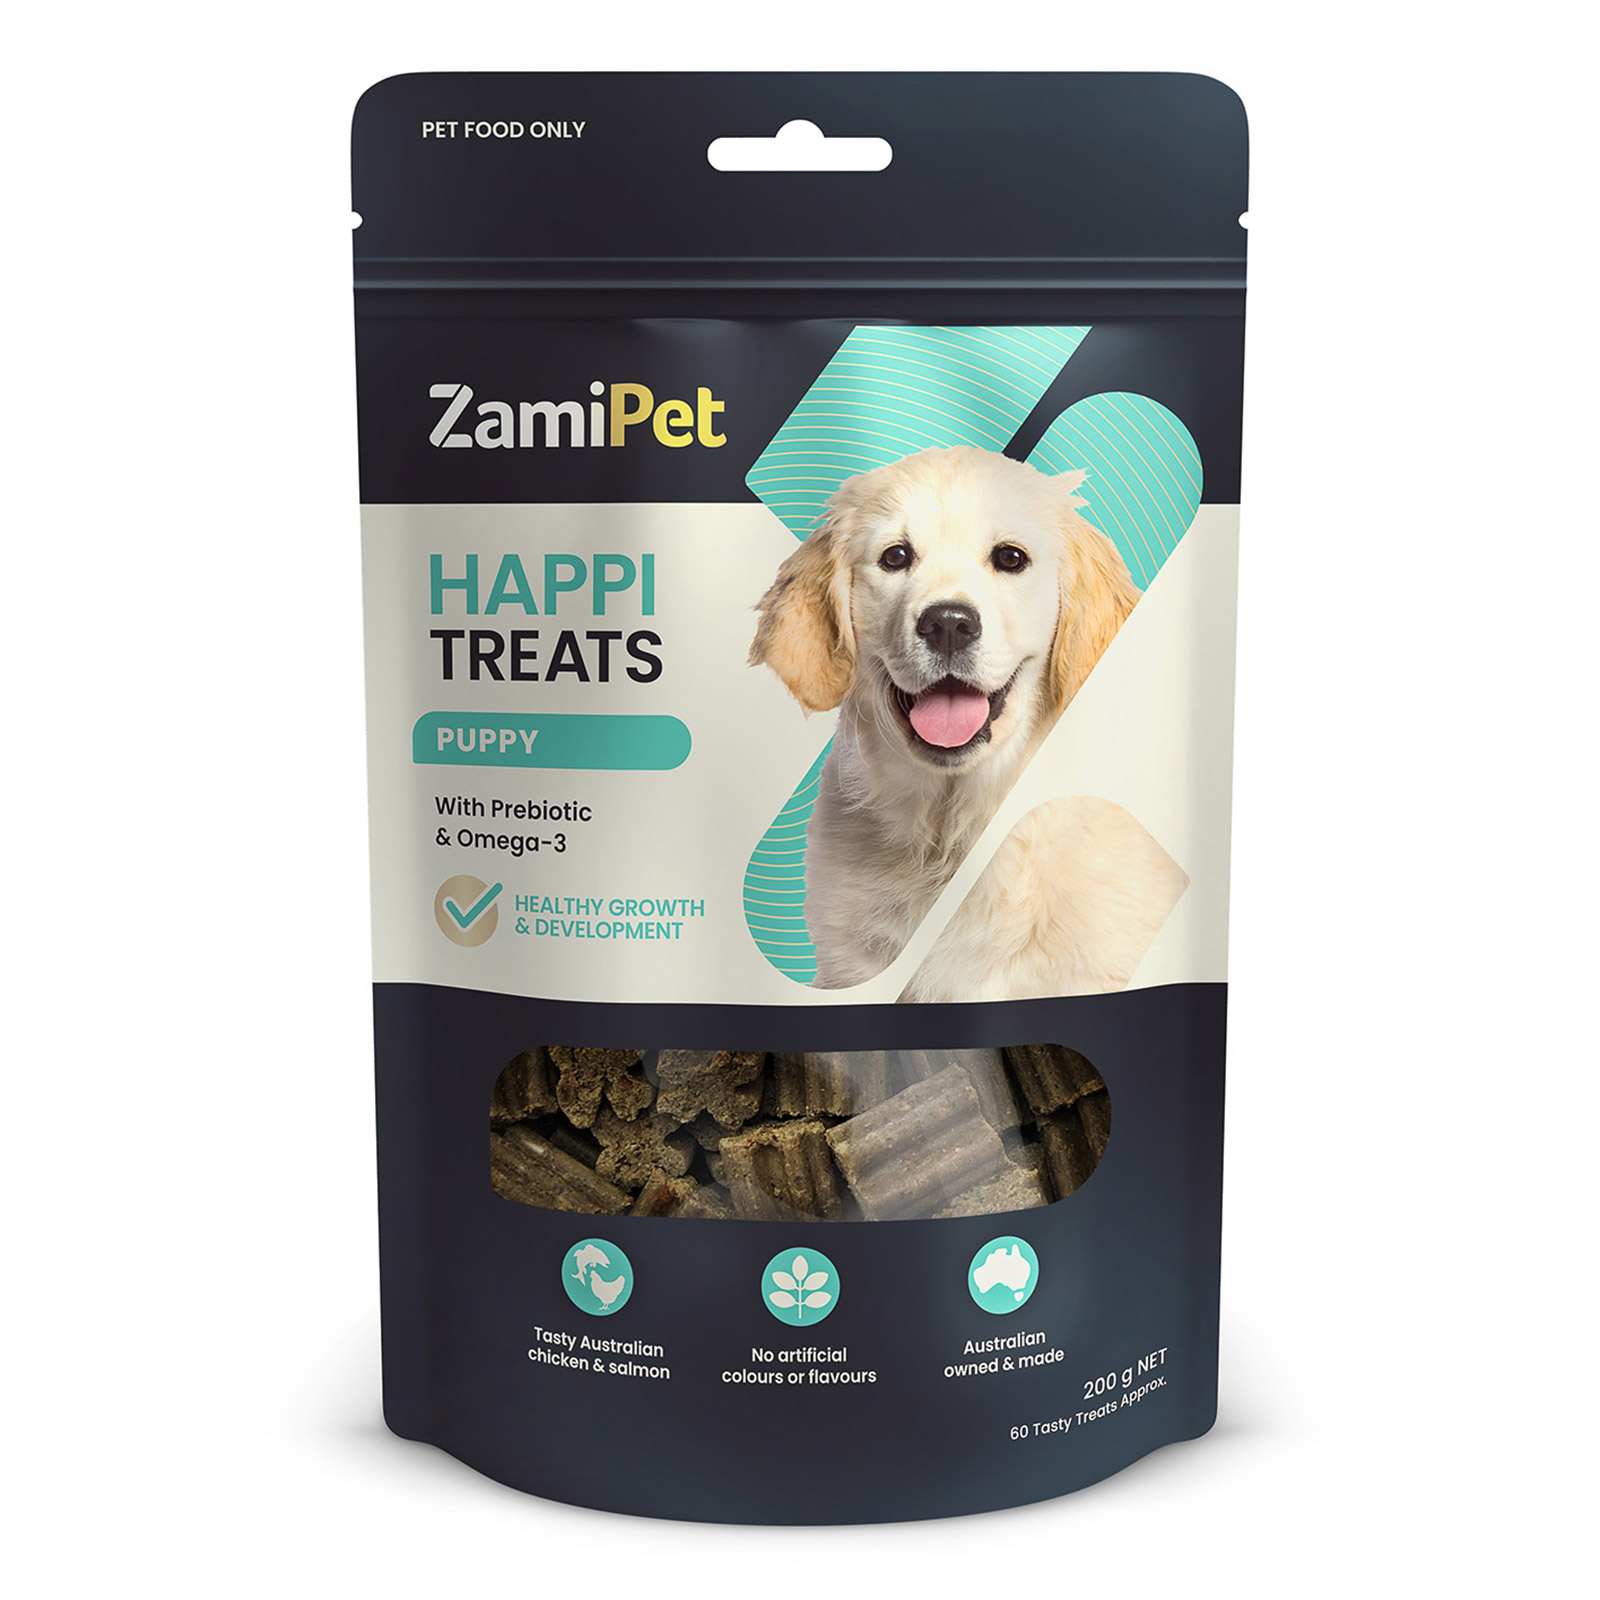 ZamiPet HappiTreats Puppy Dog Chews for Dogs